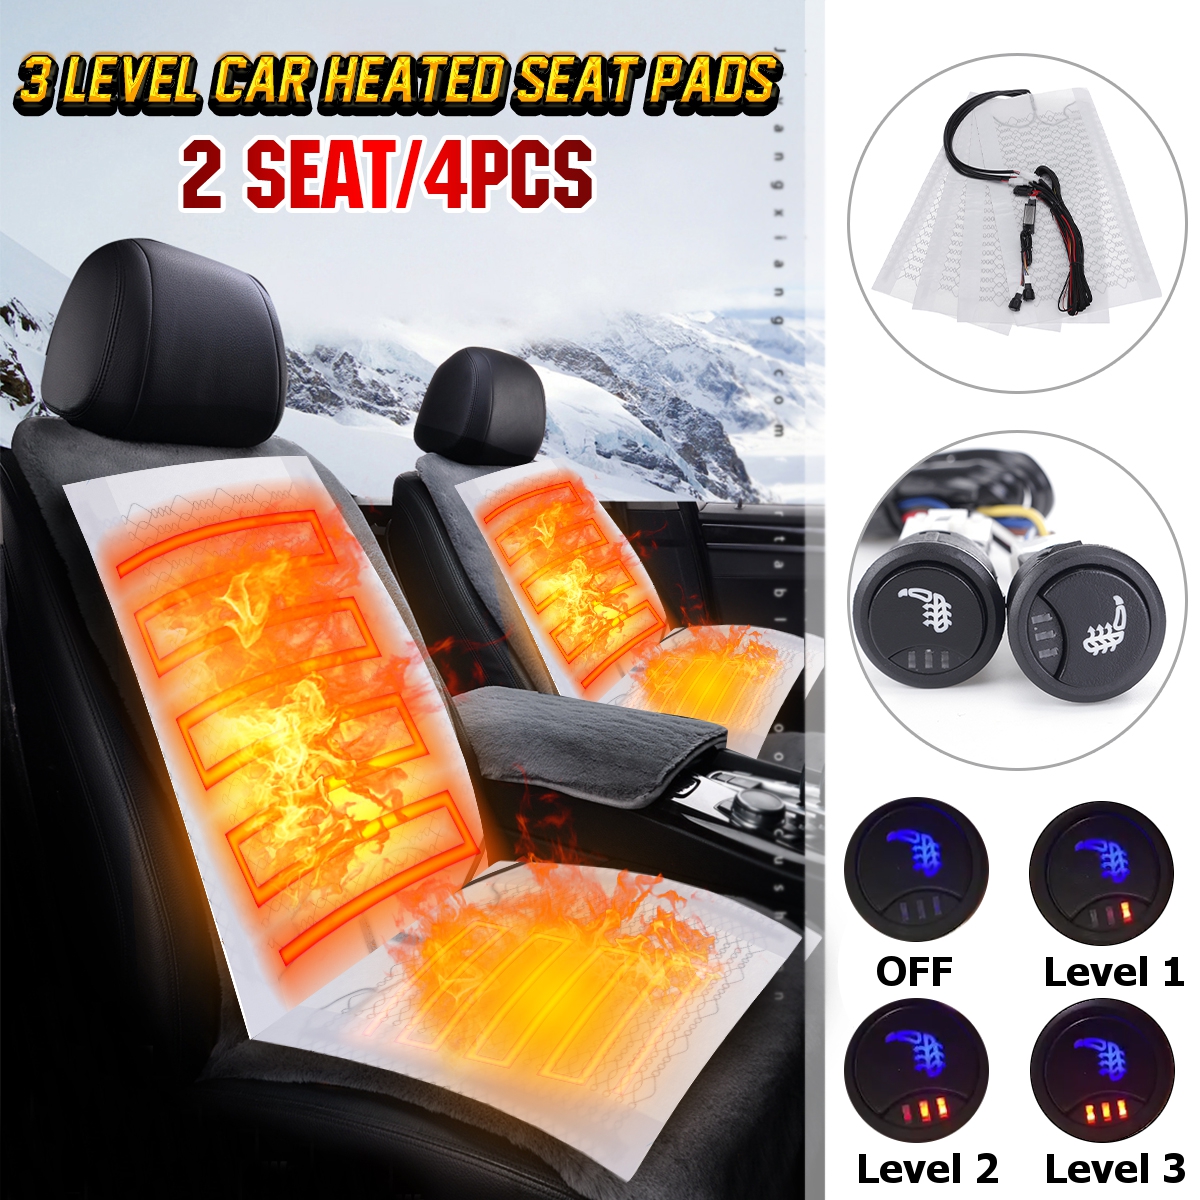 4pcs-12V-Carbon-Fiber-Universal-Car-Heated-Seat-Pads-3-Level-2-Seat-Control-1578062-2